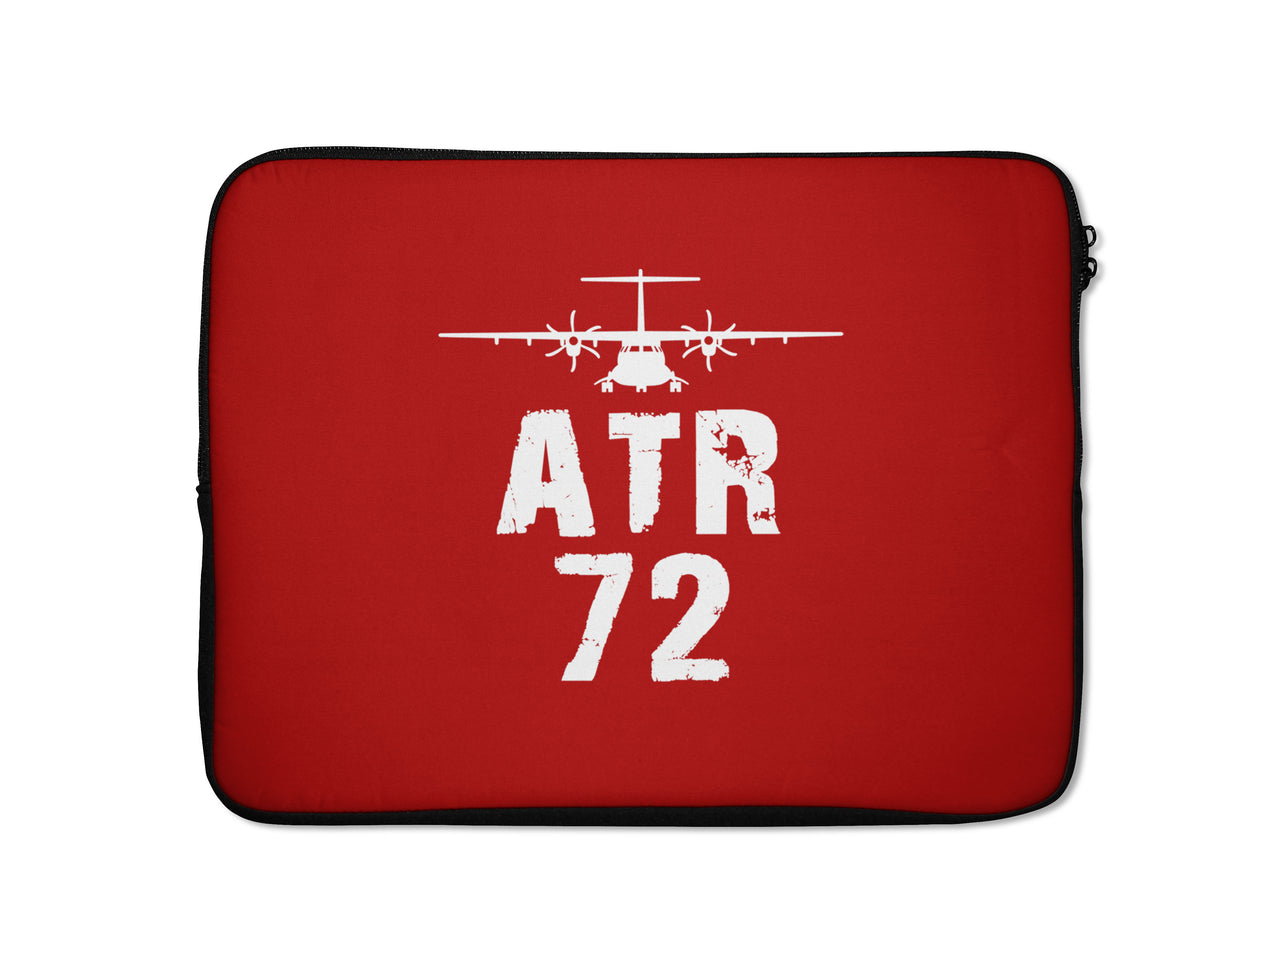 ATR-72 & Plane Designed Laptop & Tablet Cases